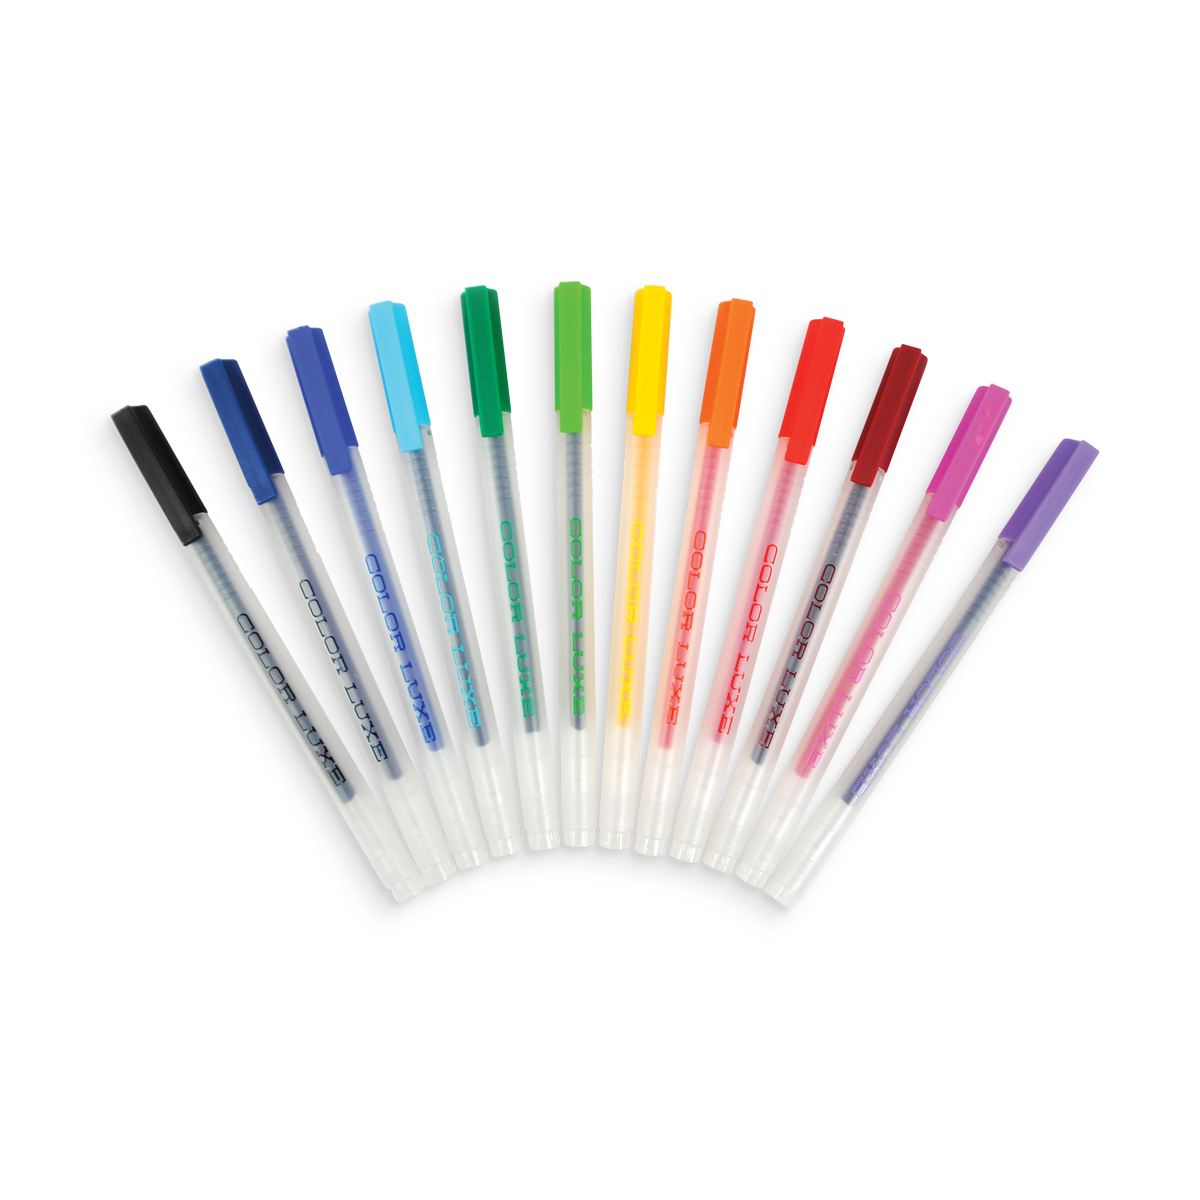 Color Luxe fine tip gel pens in a rainbow pattern